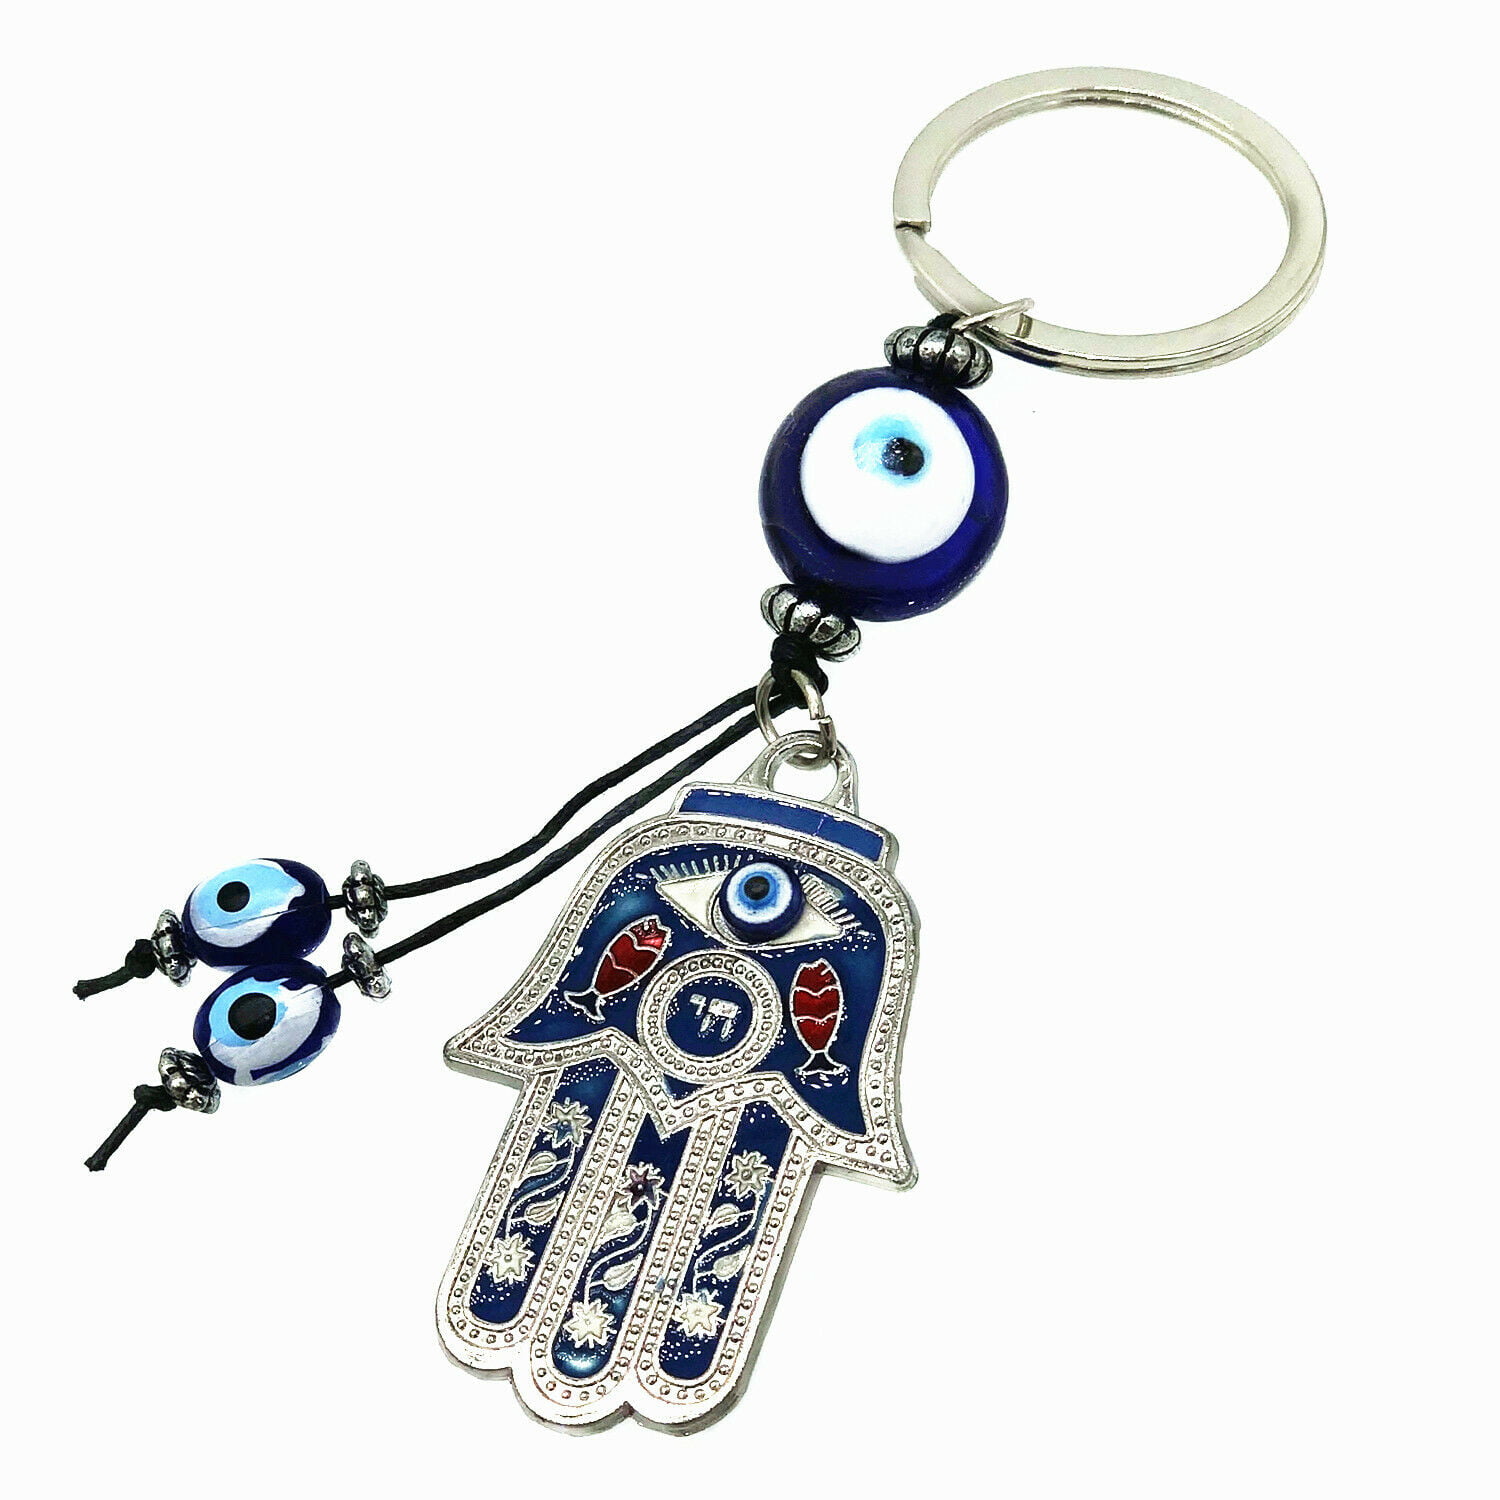 Easy Install Removable Blue Eye Keychain Gift US Seller 